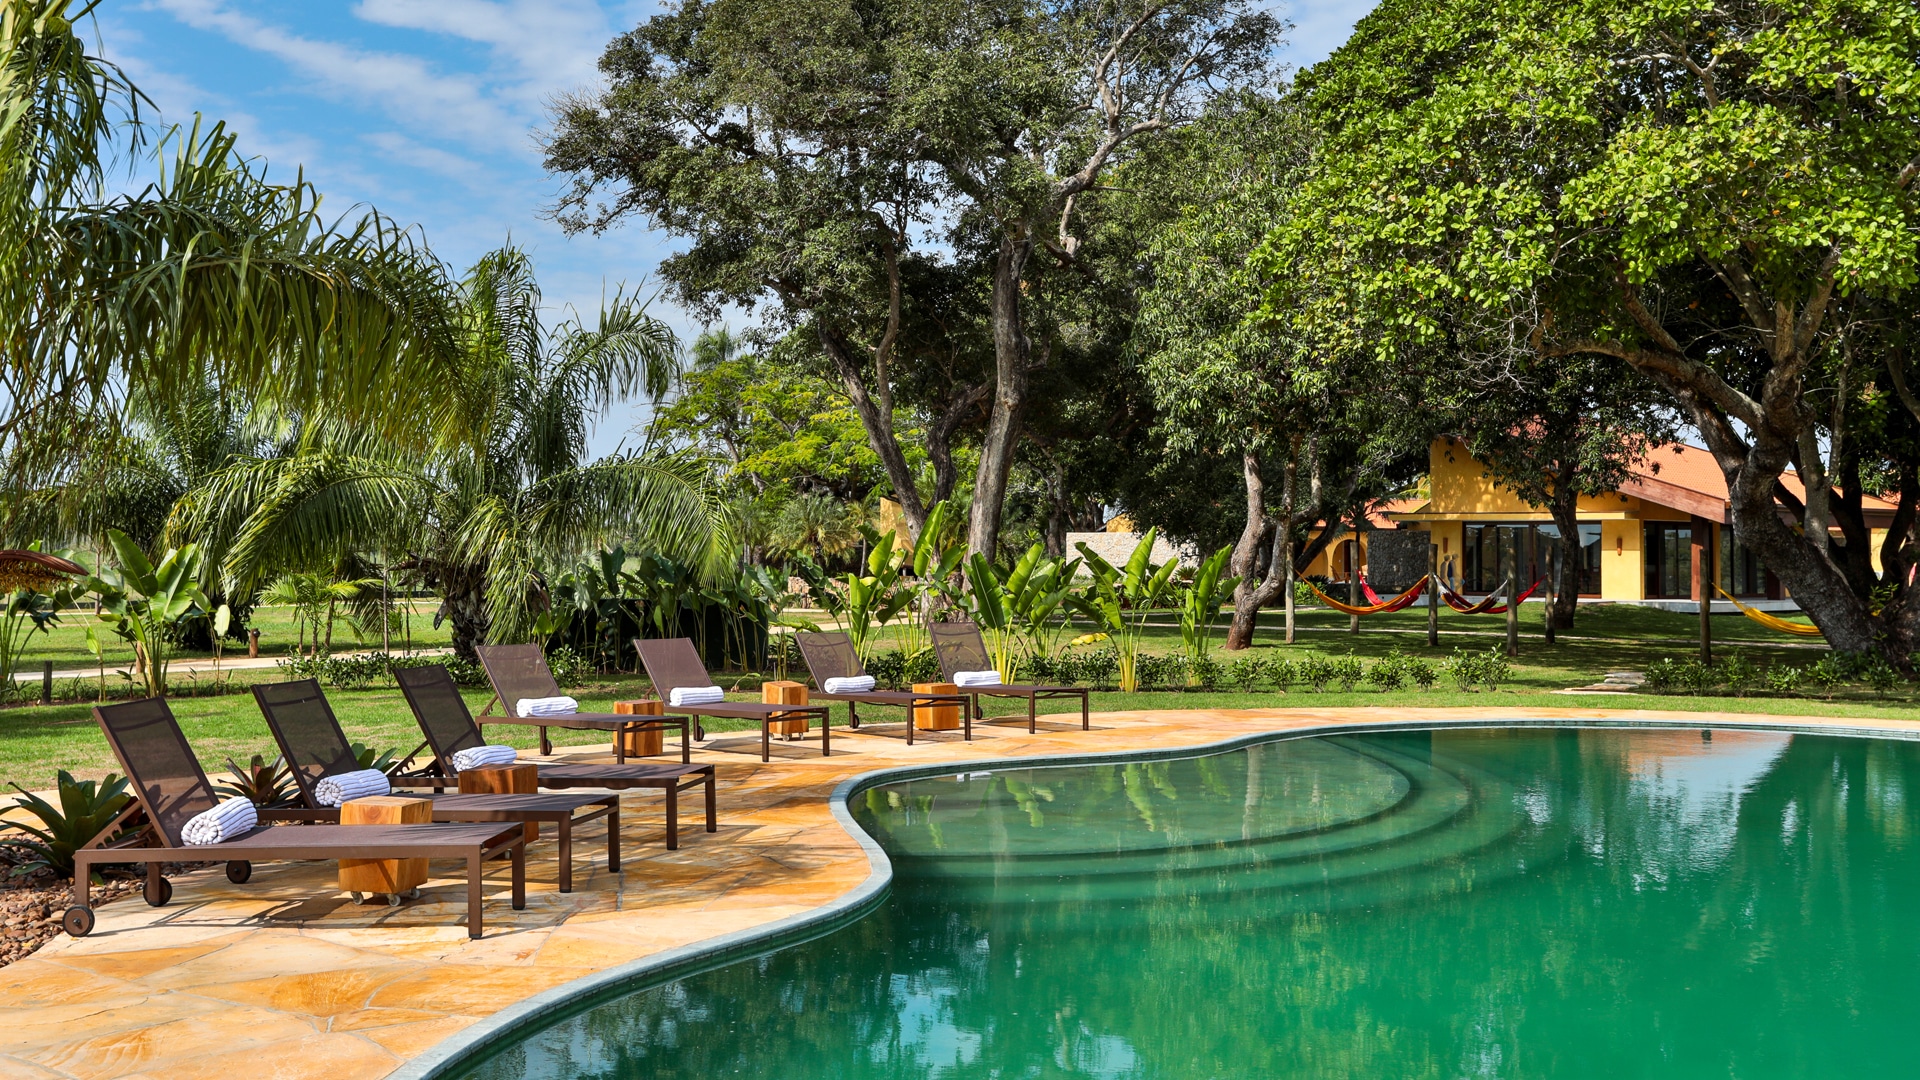 Refugio Caiman Ecologico piscine hotel